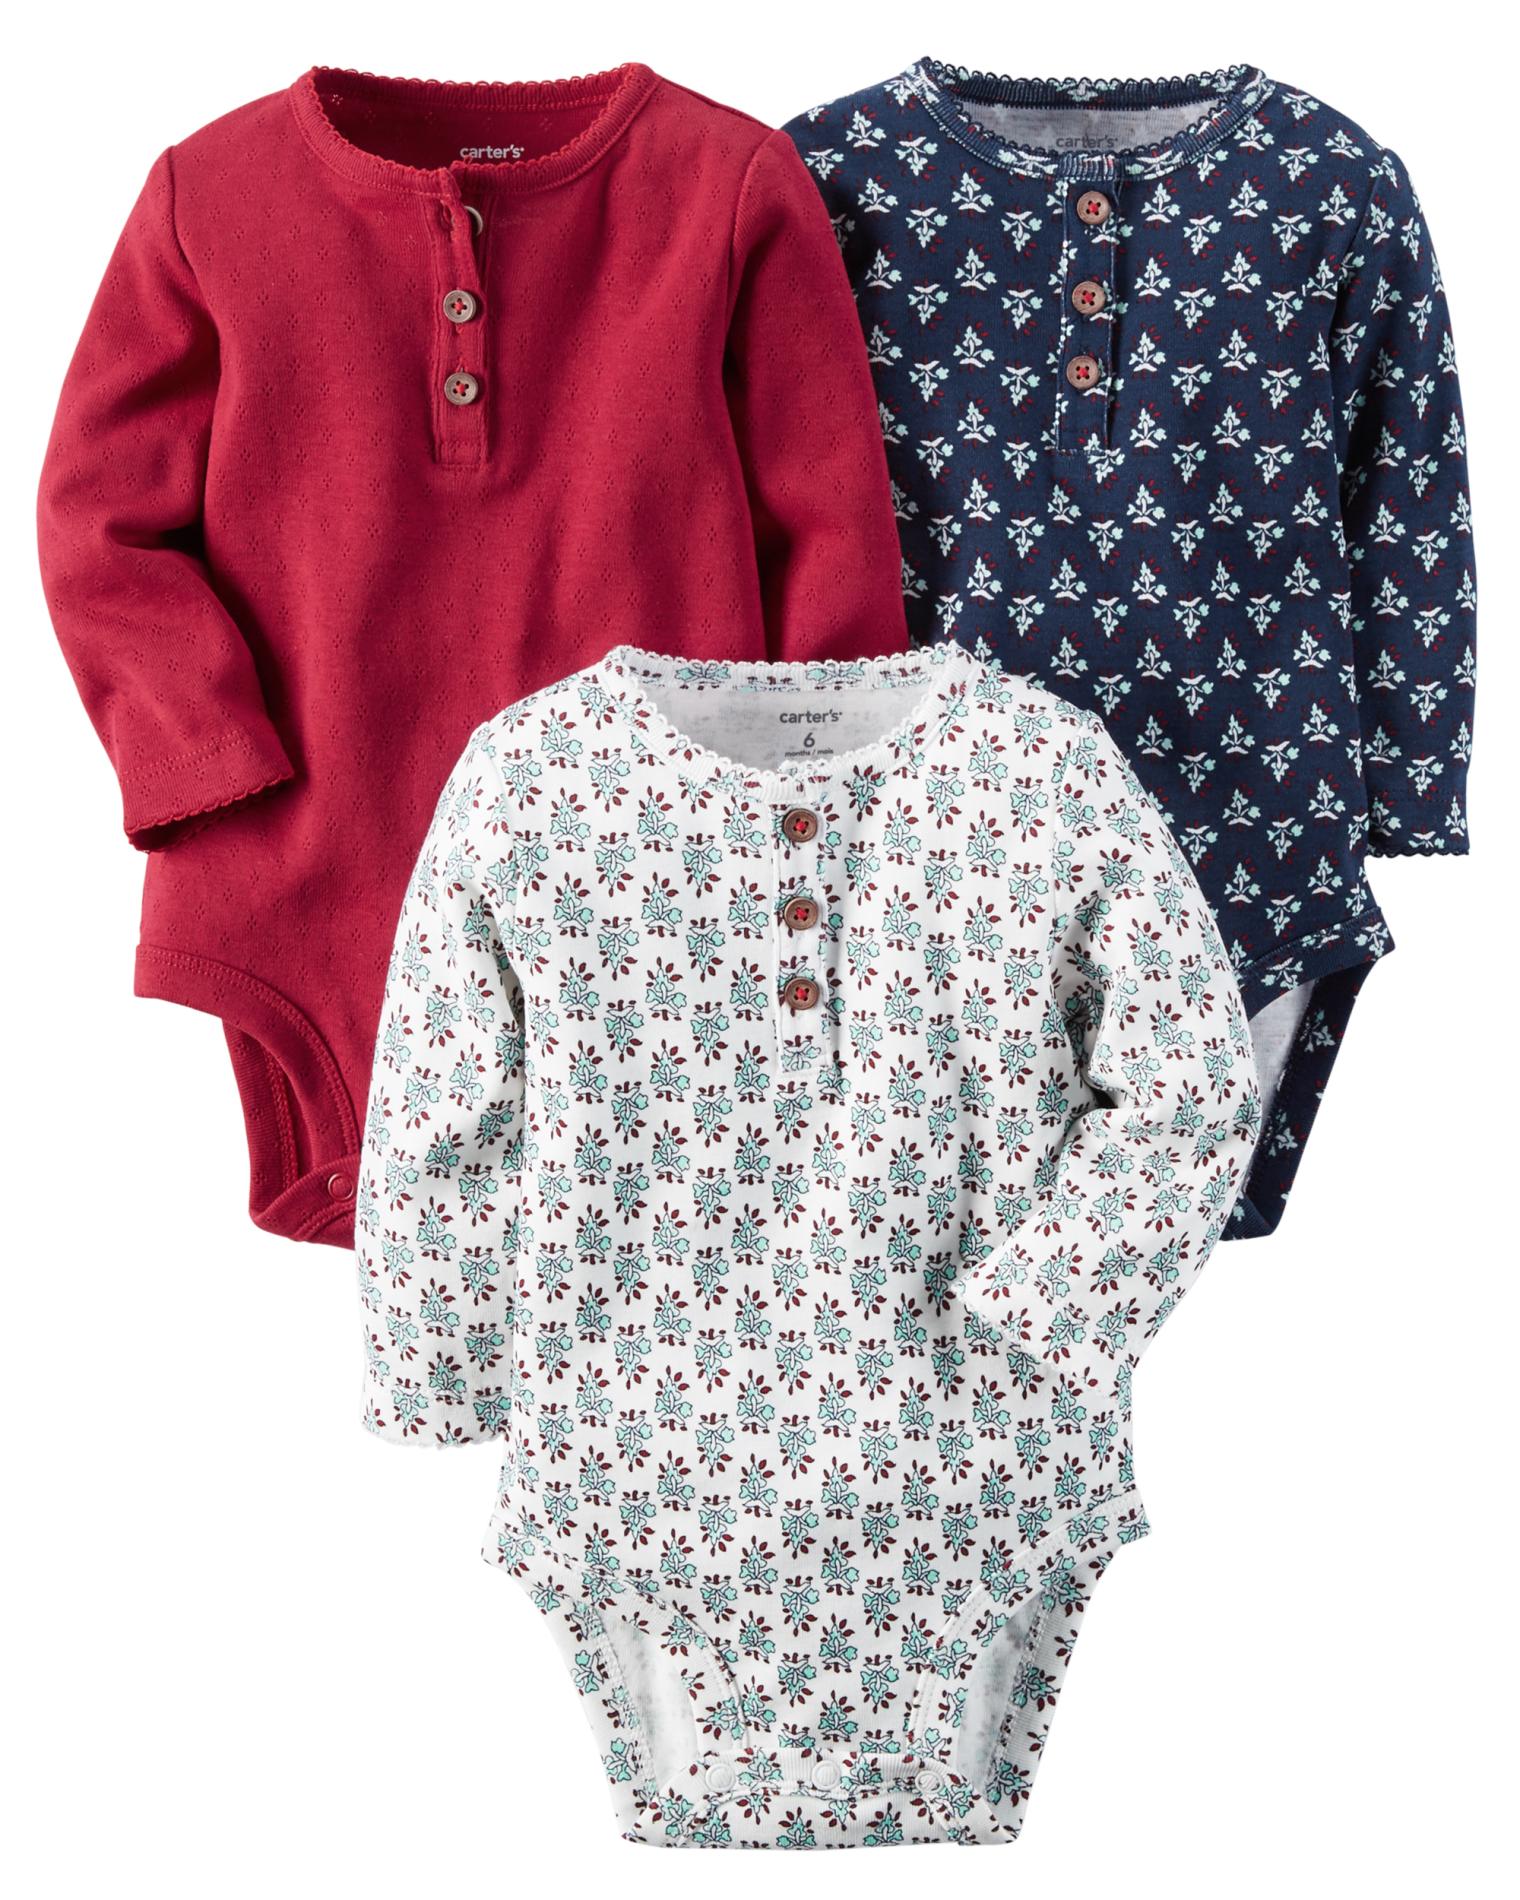 Carter's Newborn & Infant Girls' 3-Pack Long-Sleeve Bodysuits - Floral & Solid